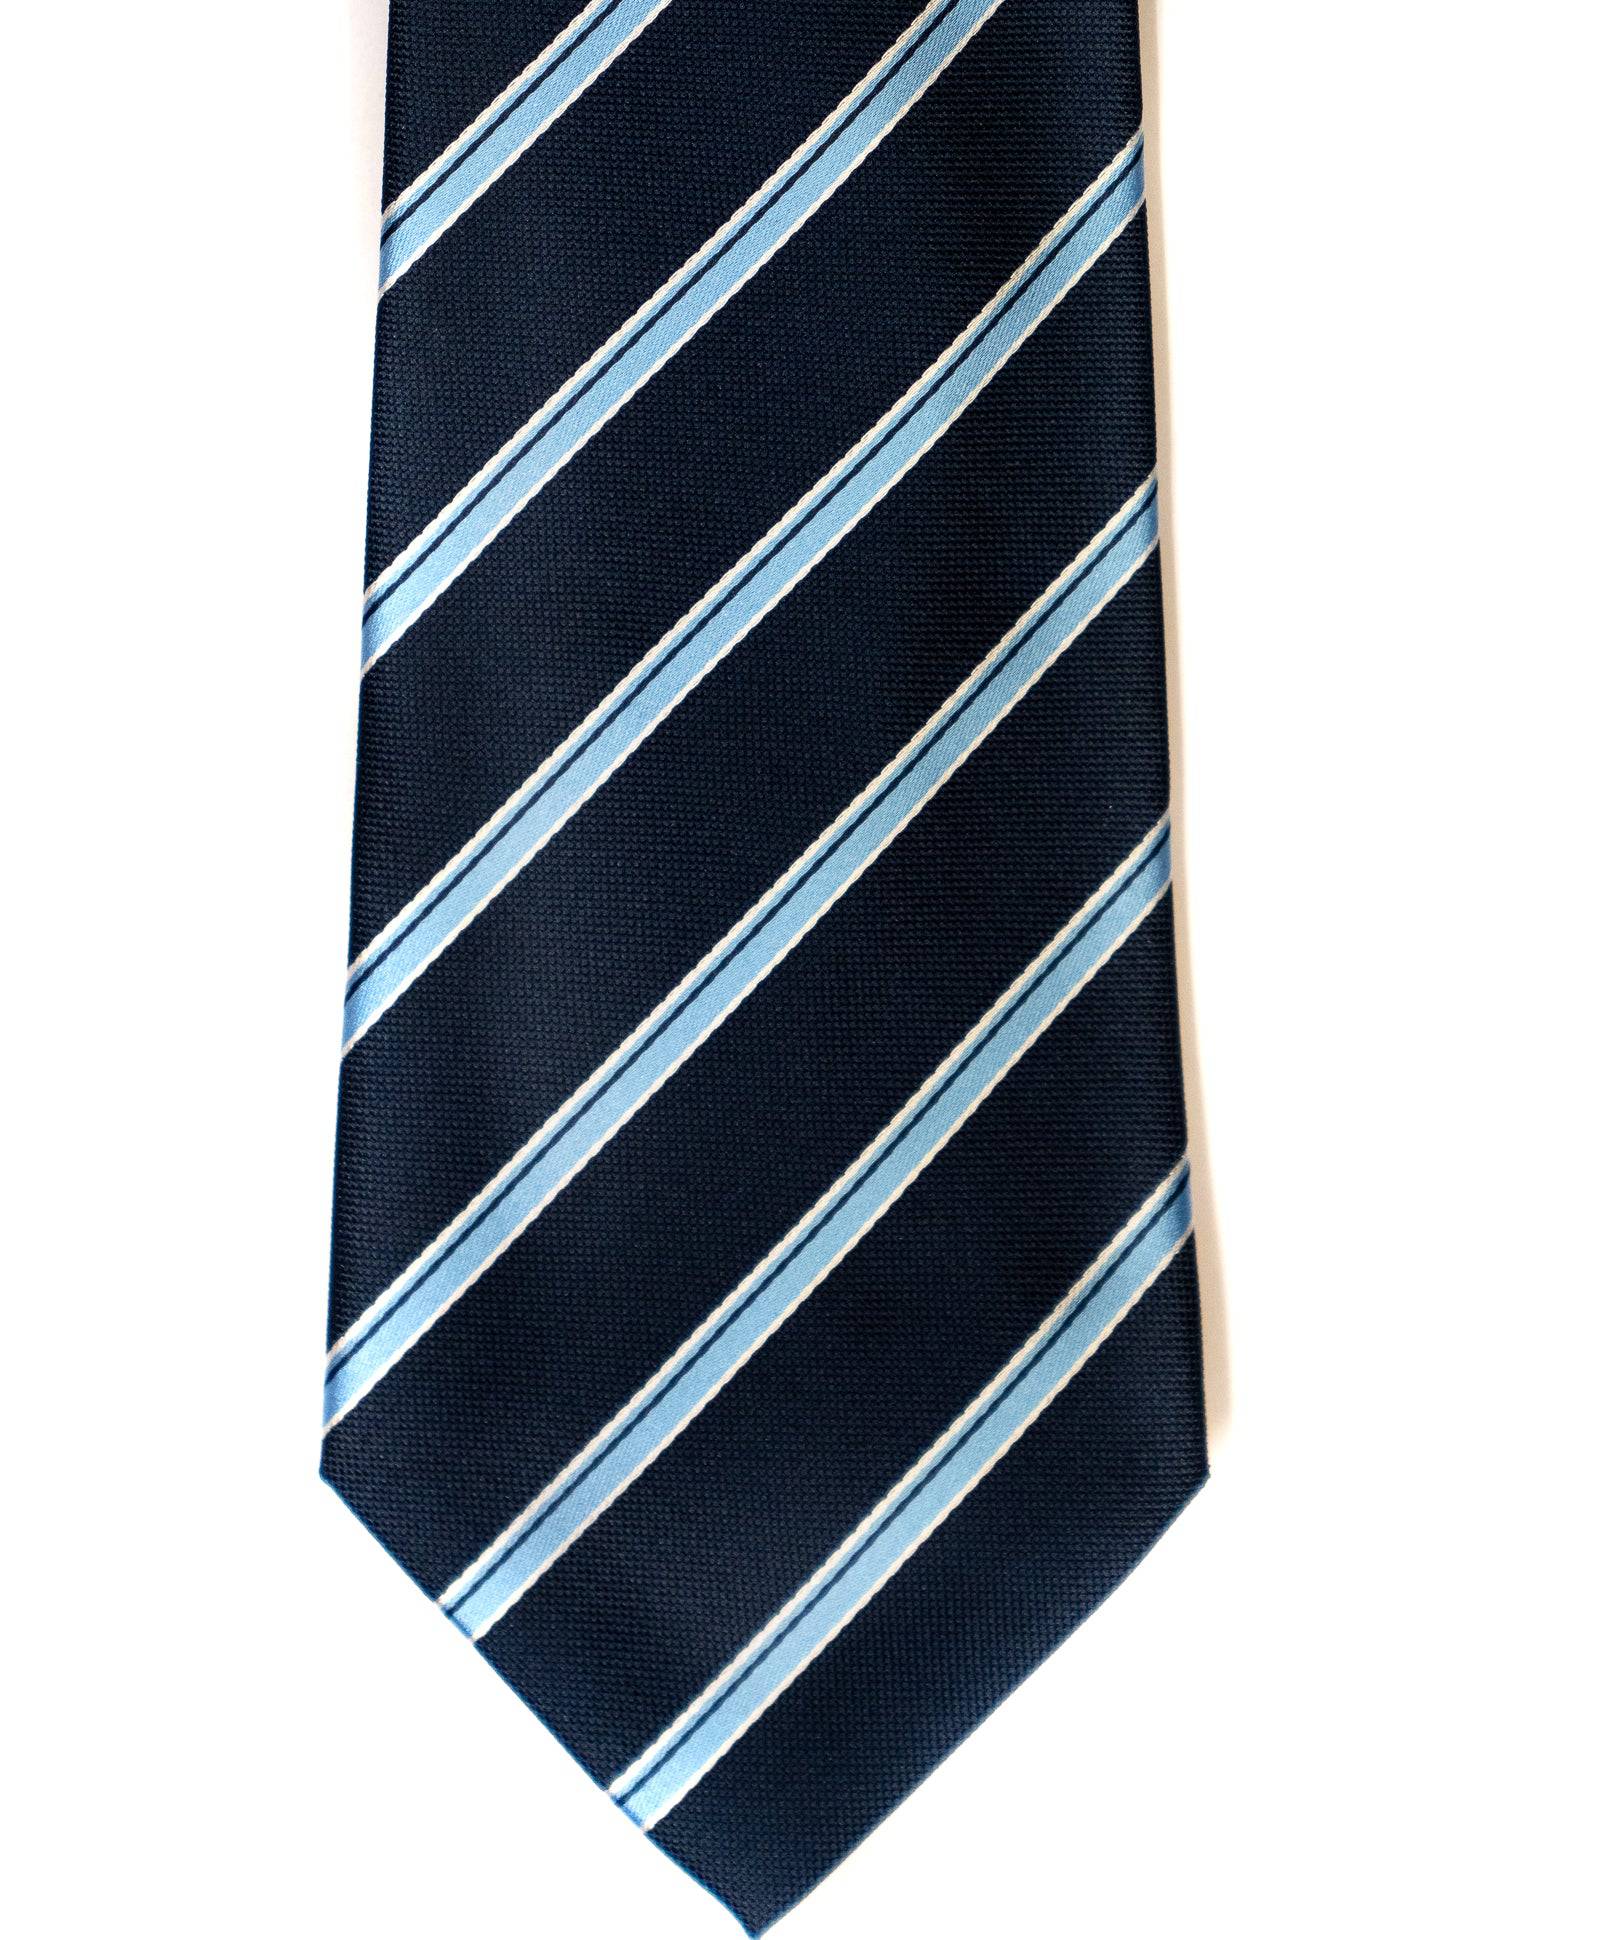 Gianfranco Stripe Tie in Navy with Light Blue - Rainwater's Men's Clothing and Tuxedo Rental